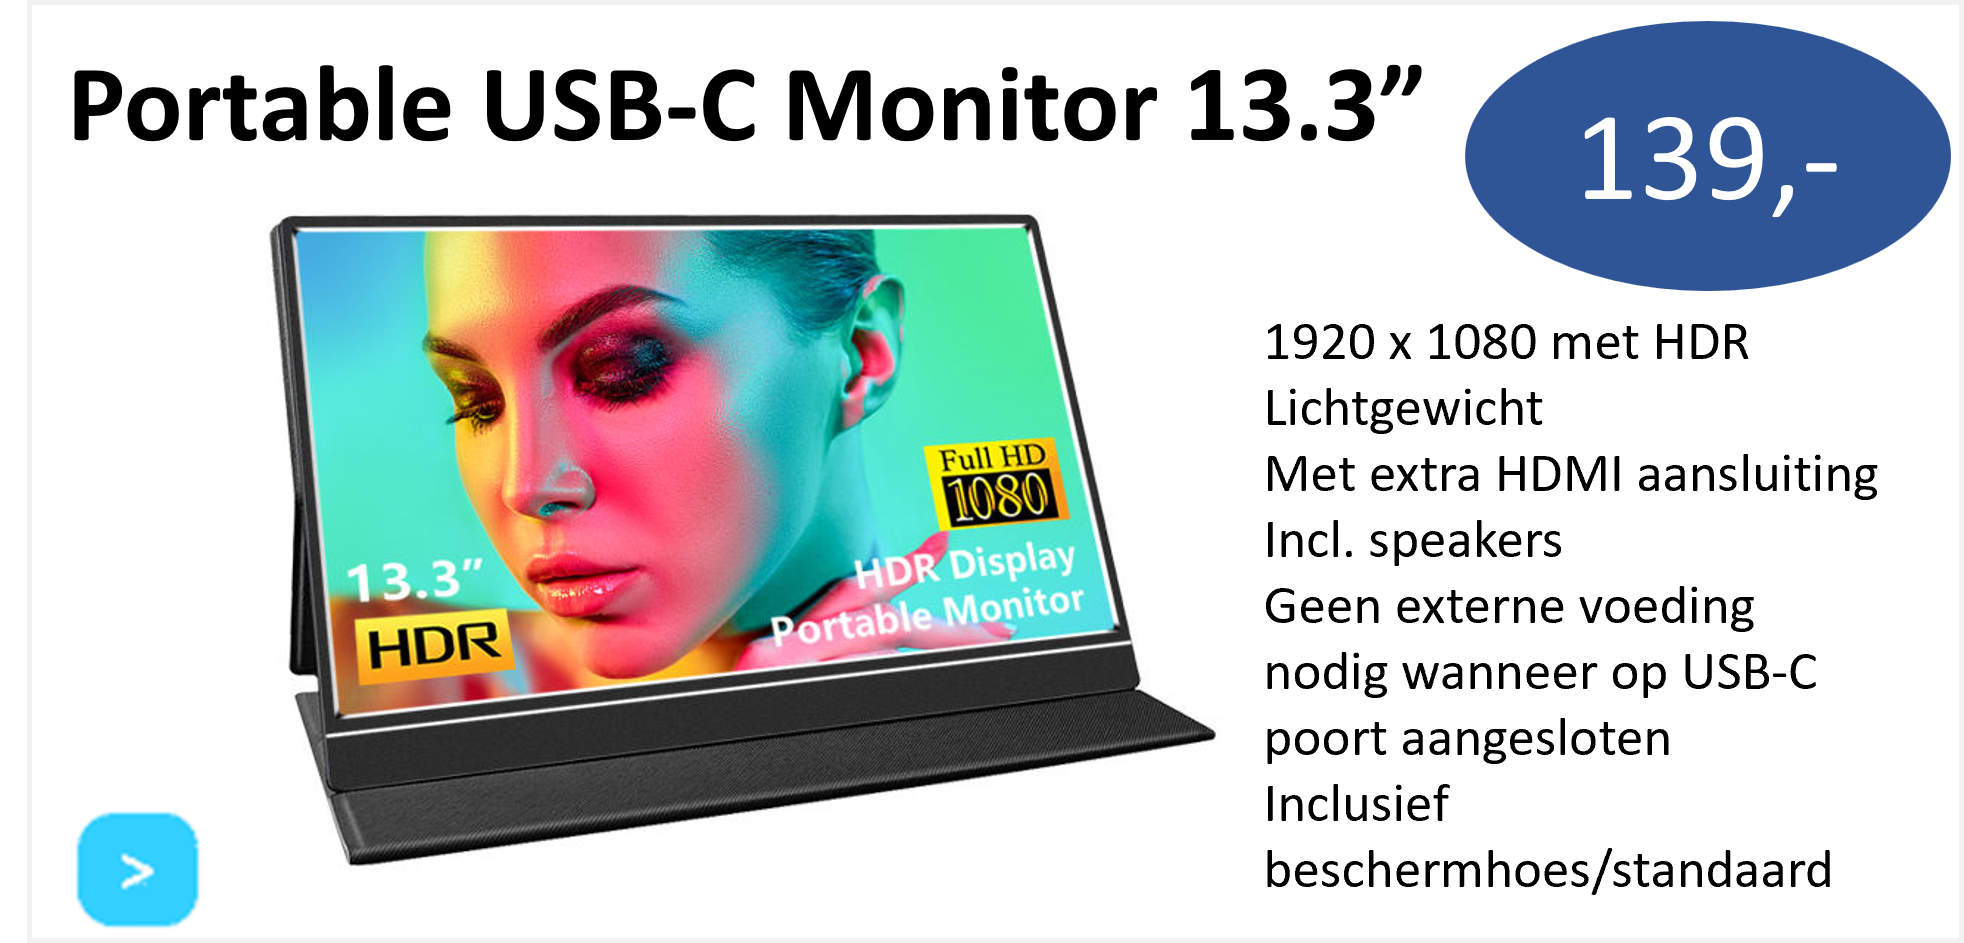 USB-C monitor 13.3 inch